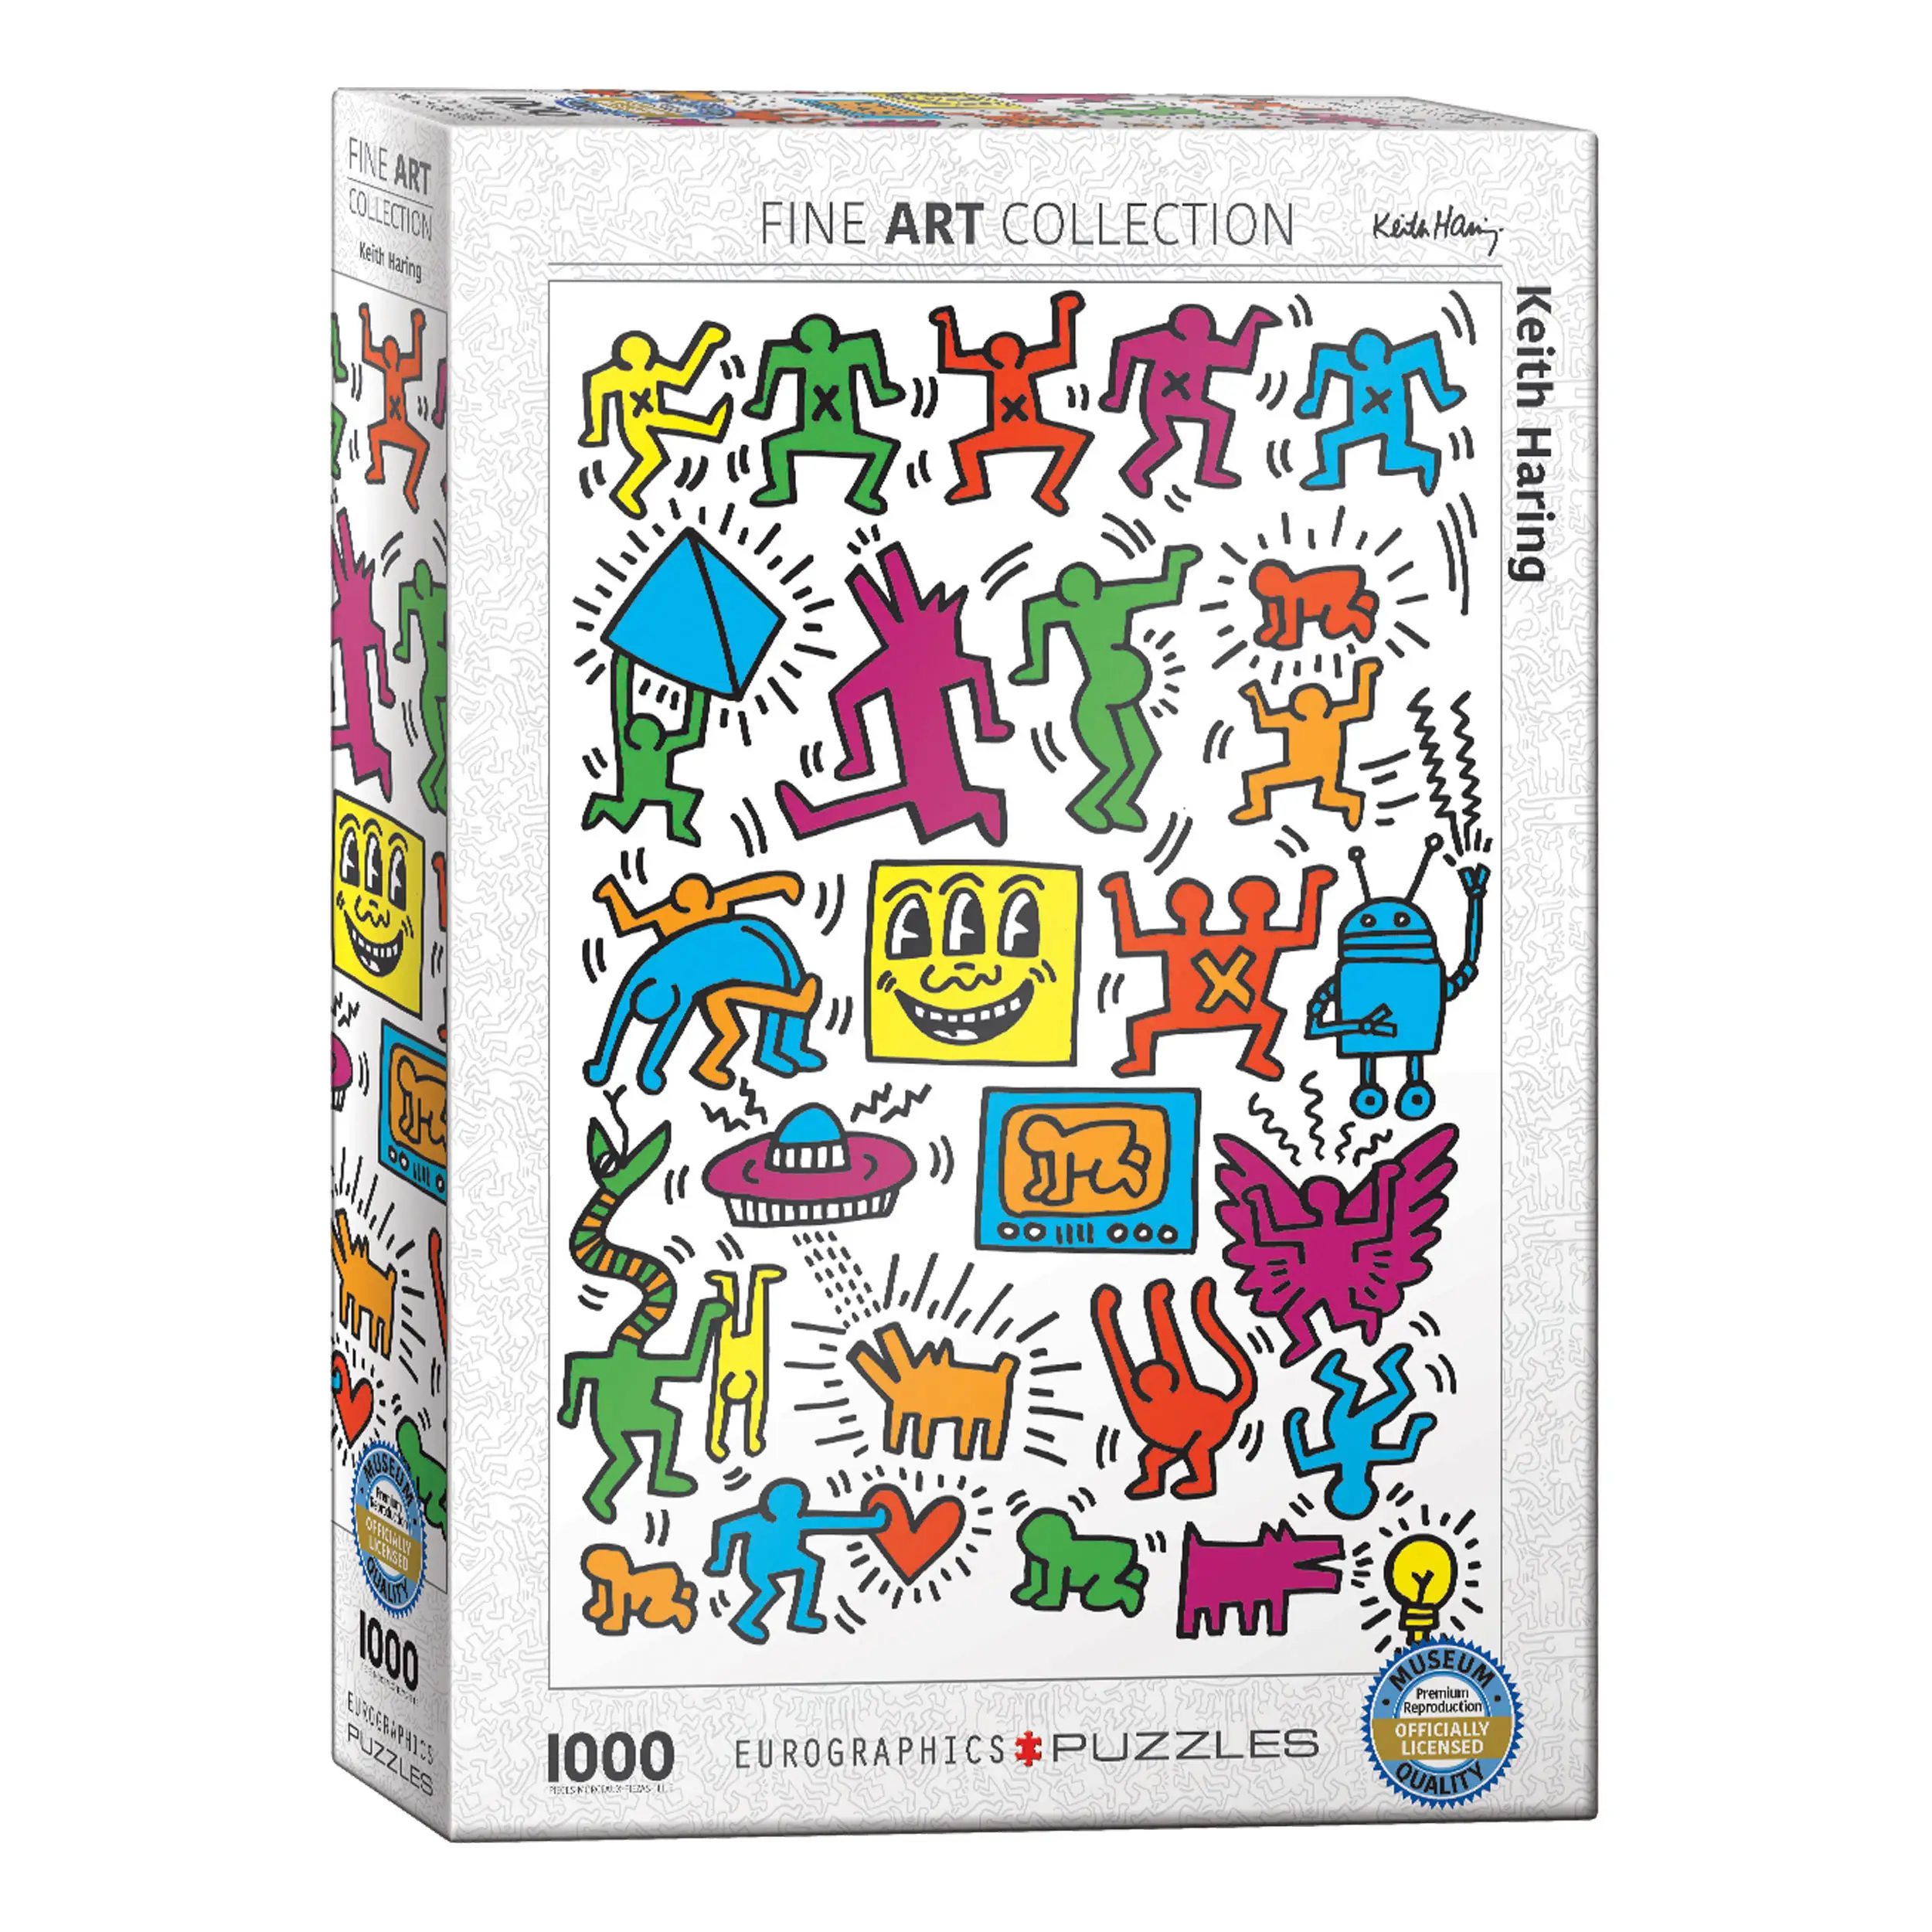 von Keith Haring Puzzle Collage